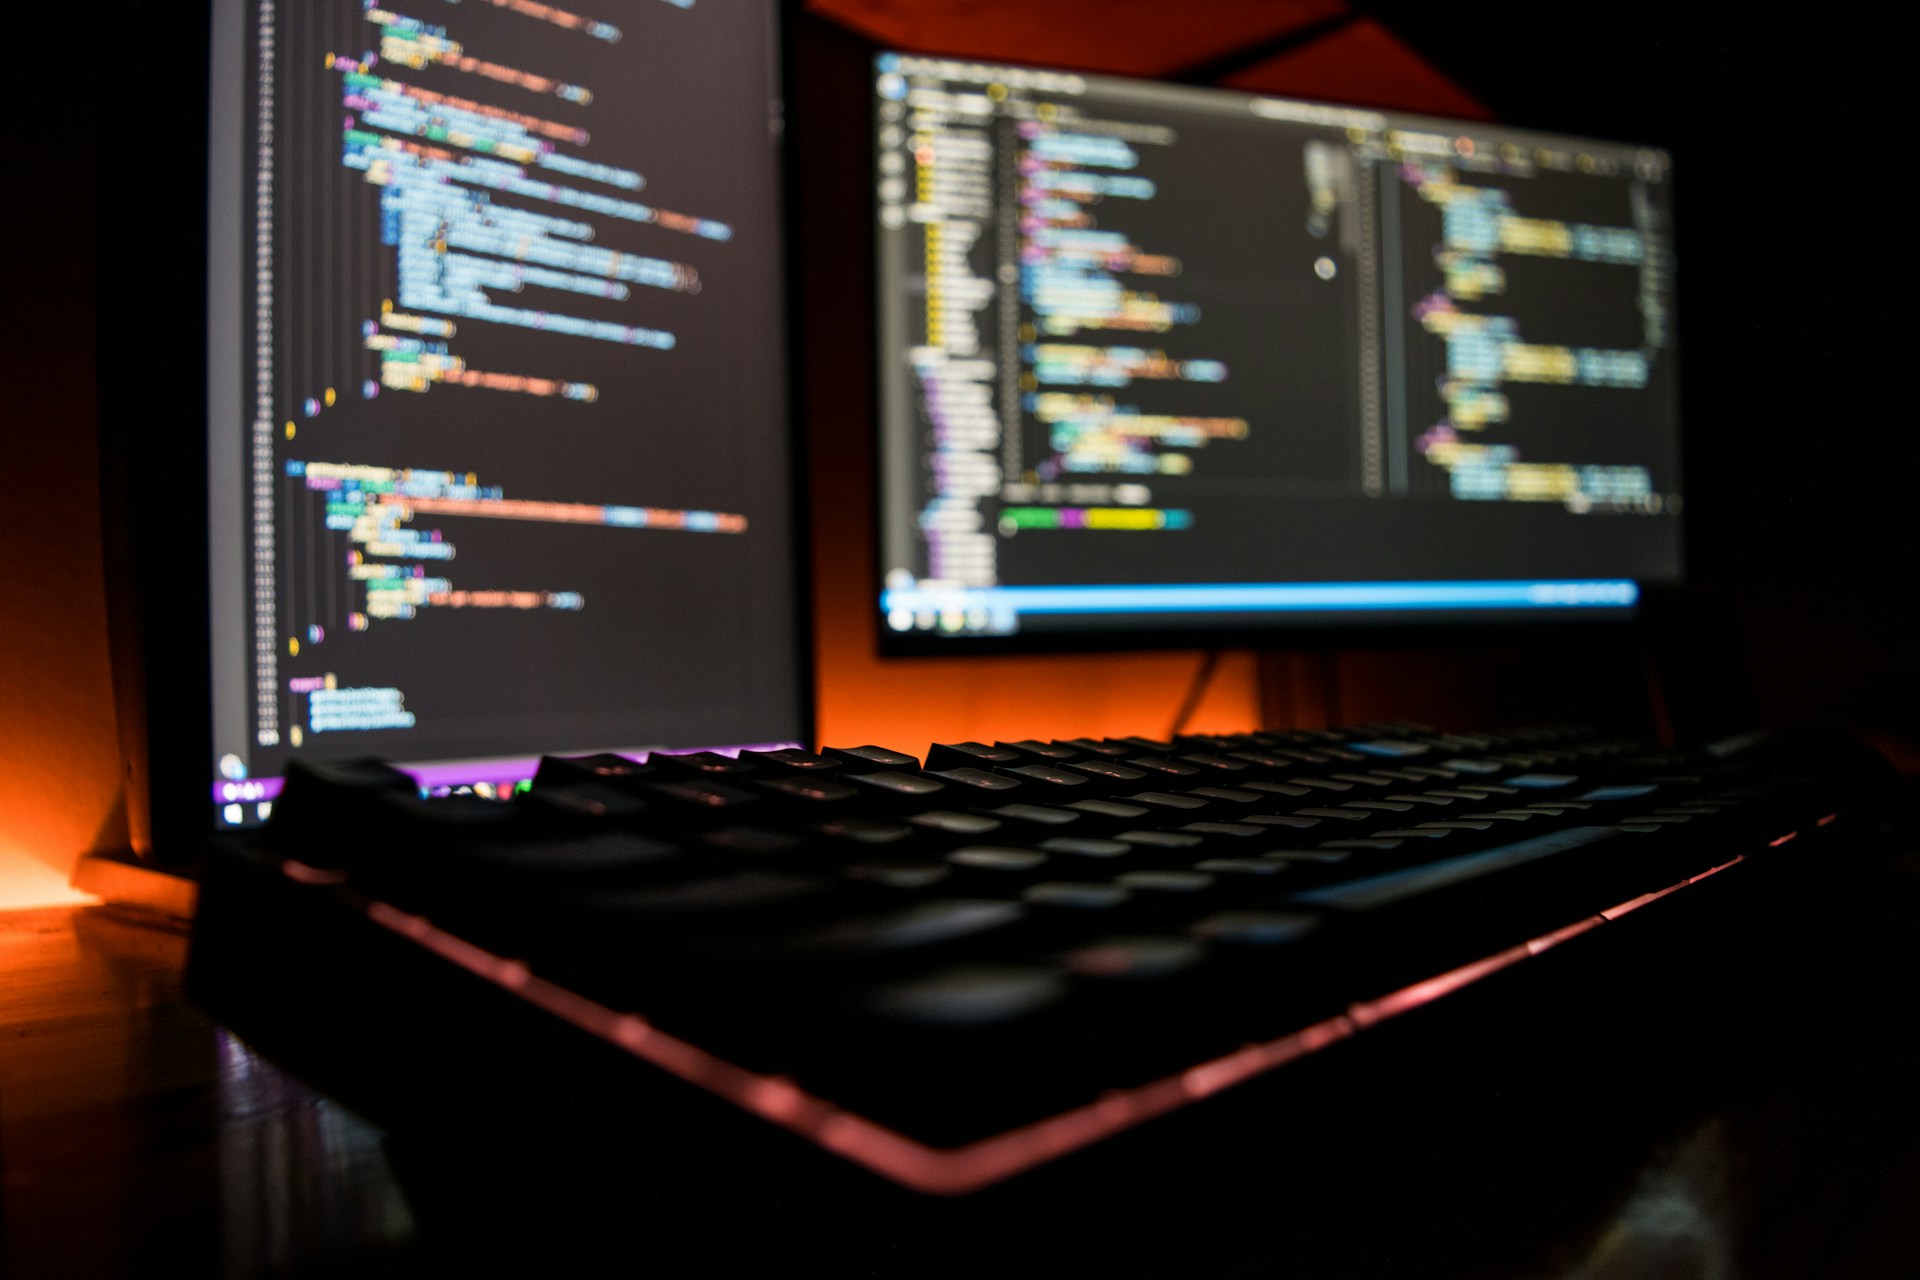 Dark keyboard and monitor